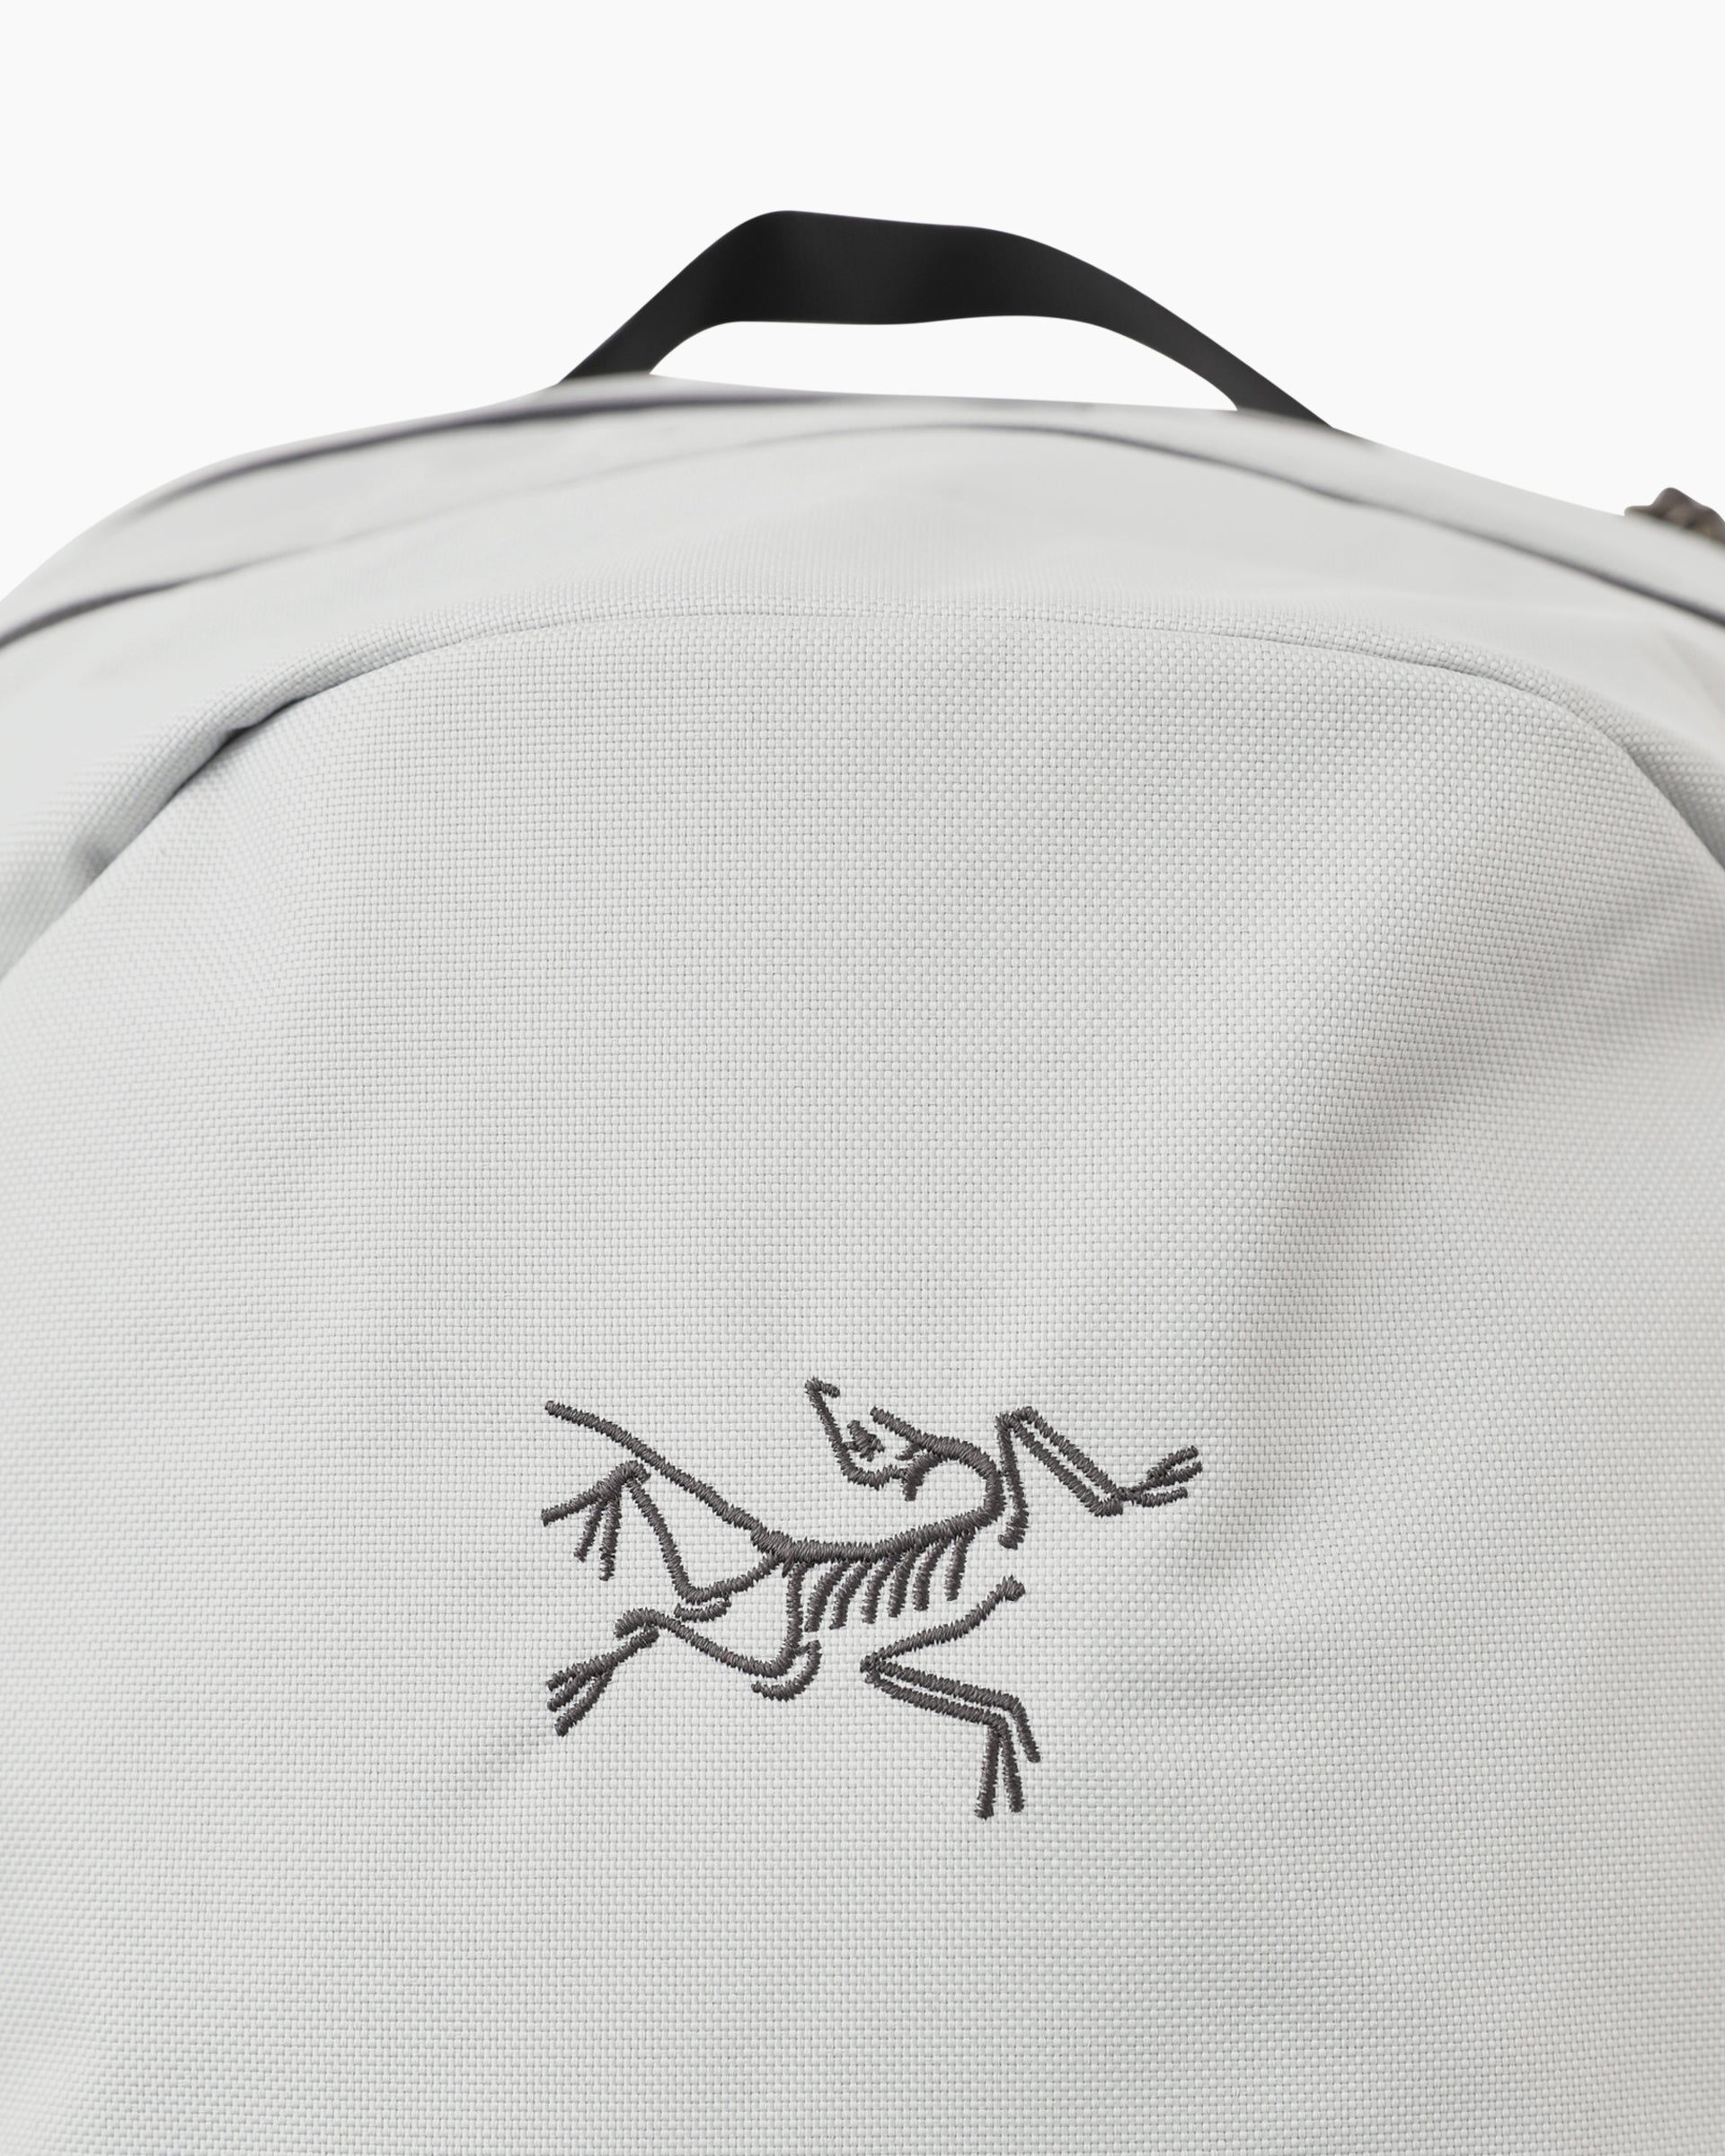 Mantis 26 Backpack Solitude / Graphite